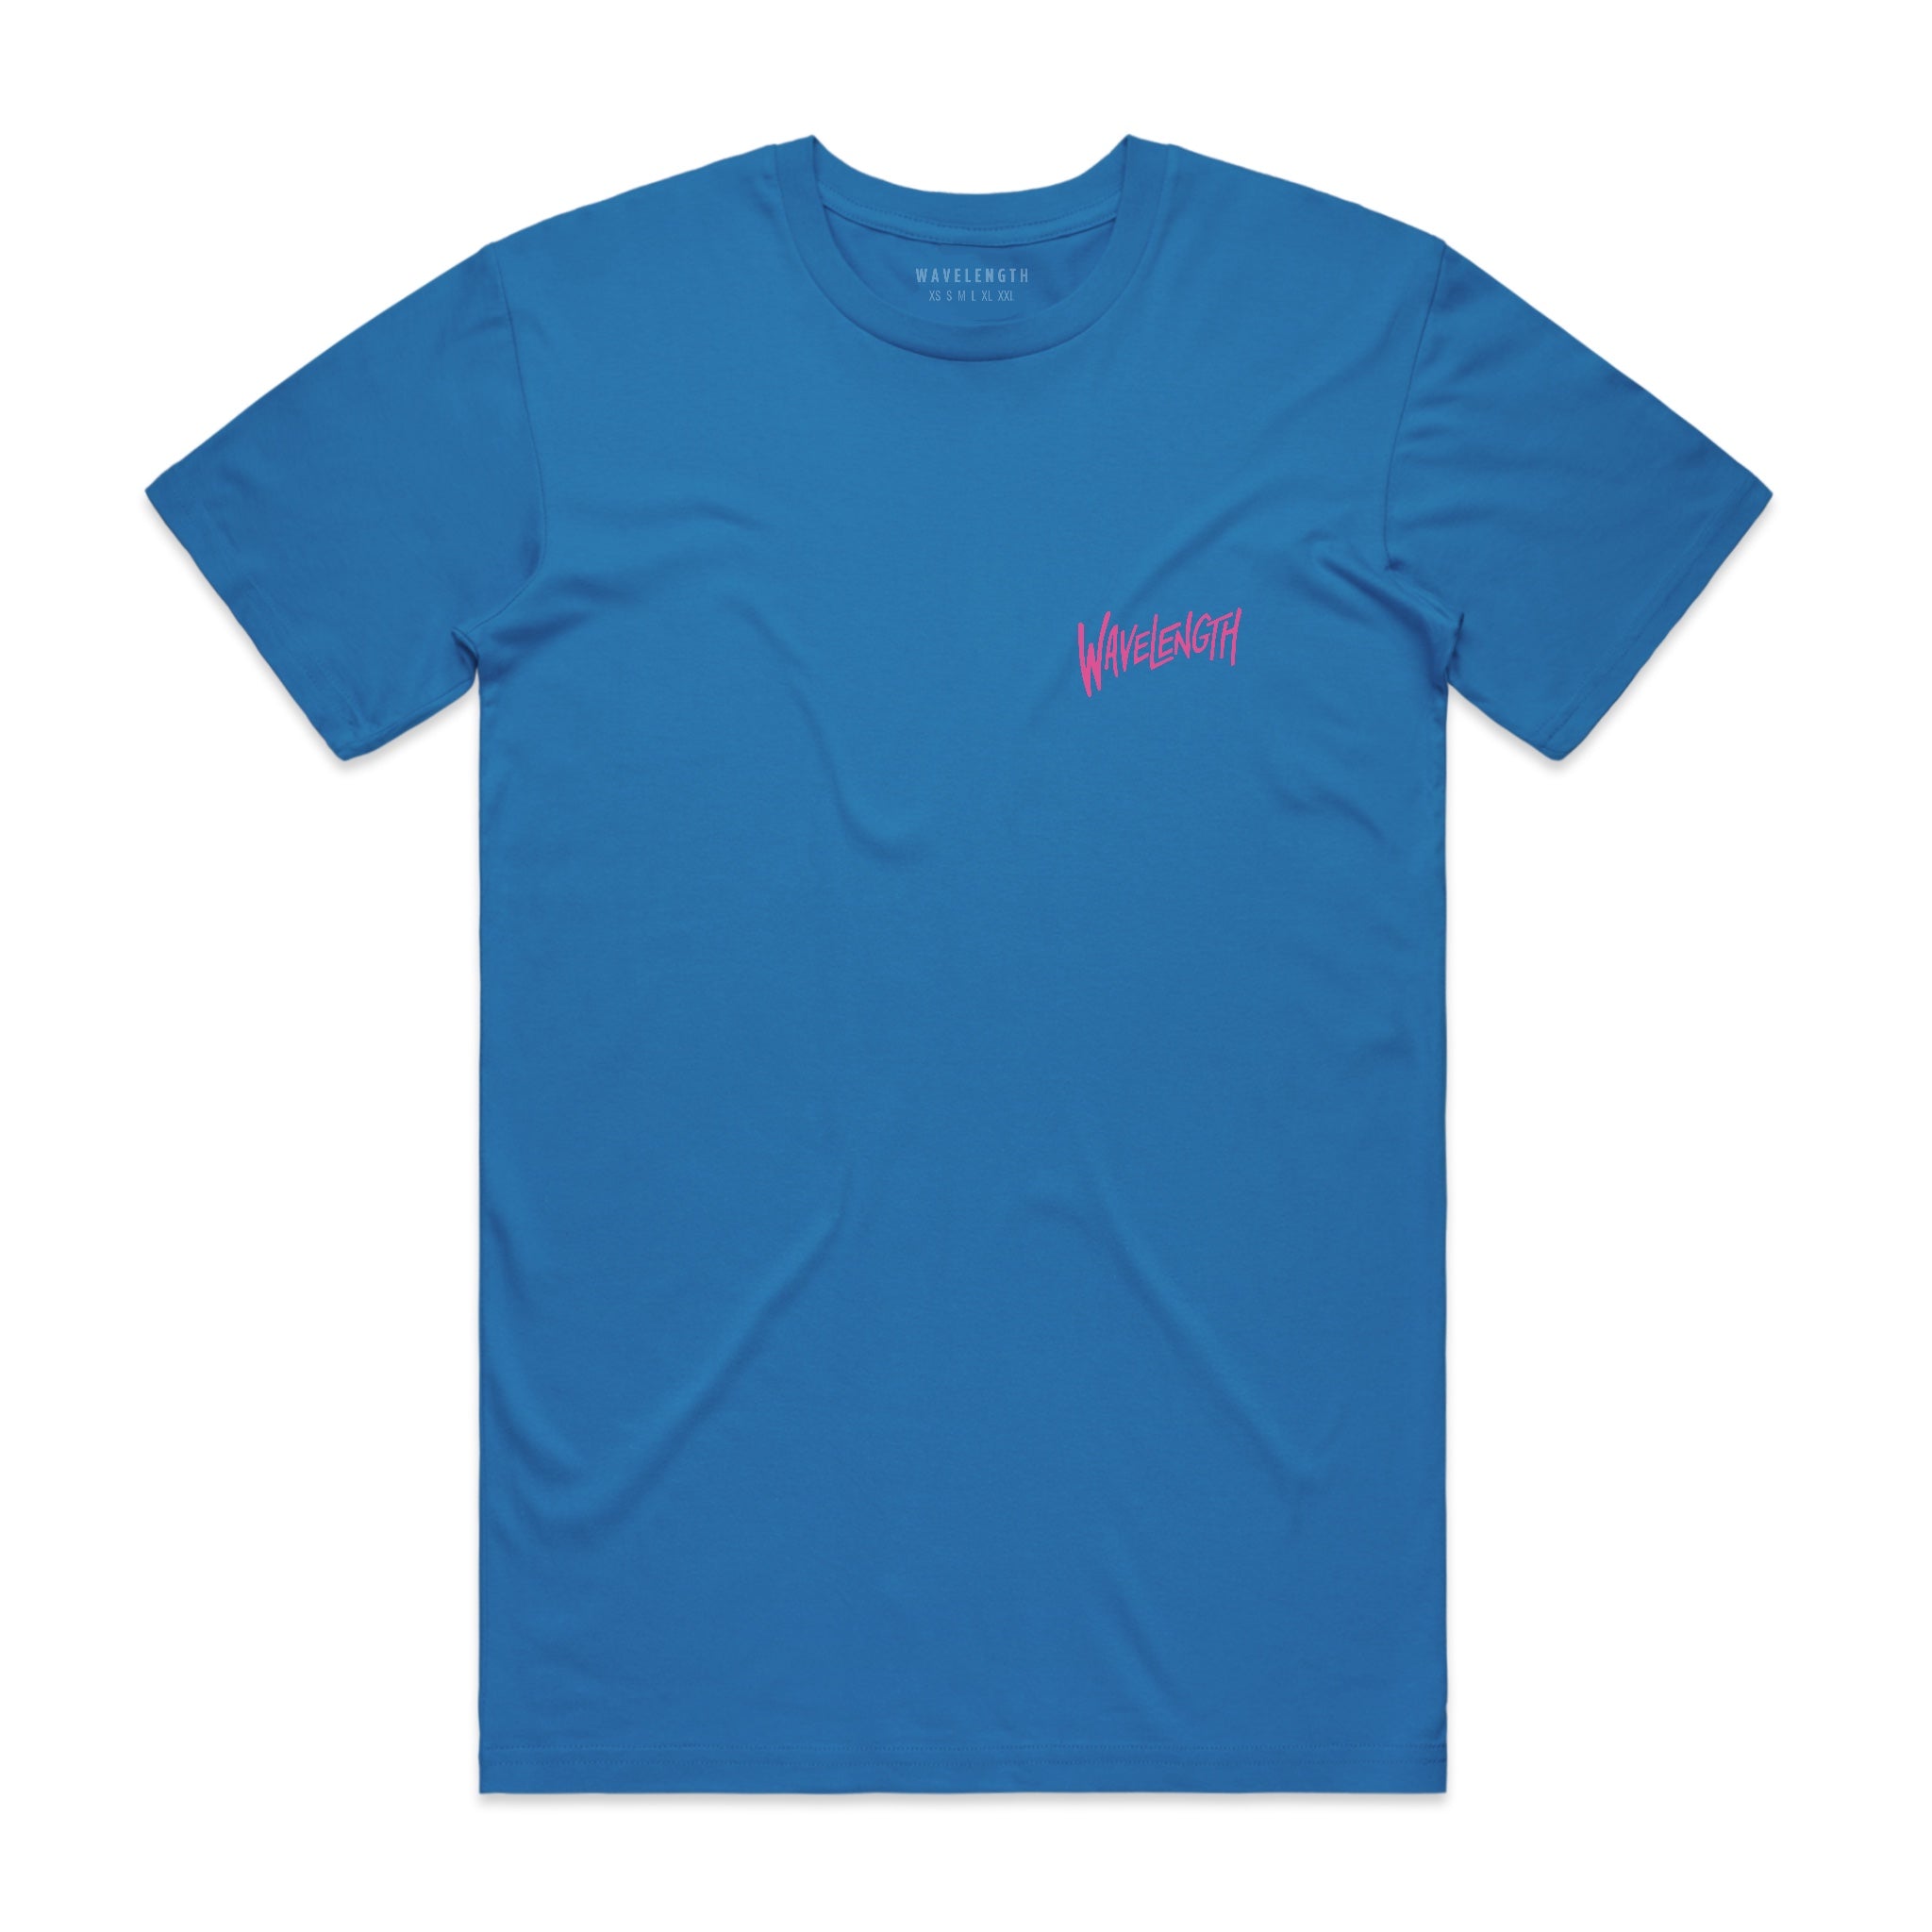 Wavelength Heritage T-shirt - Electric Blue / Hot Pink